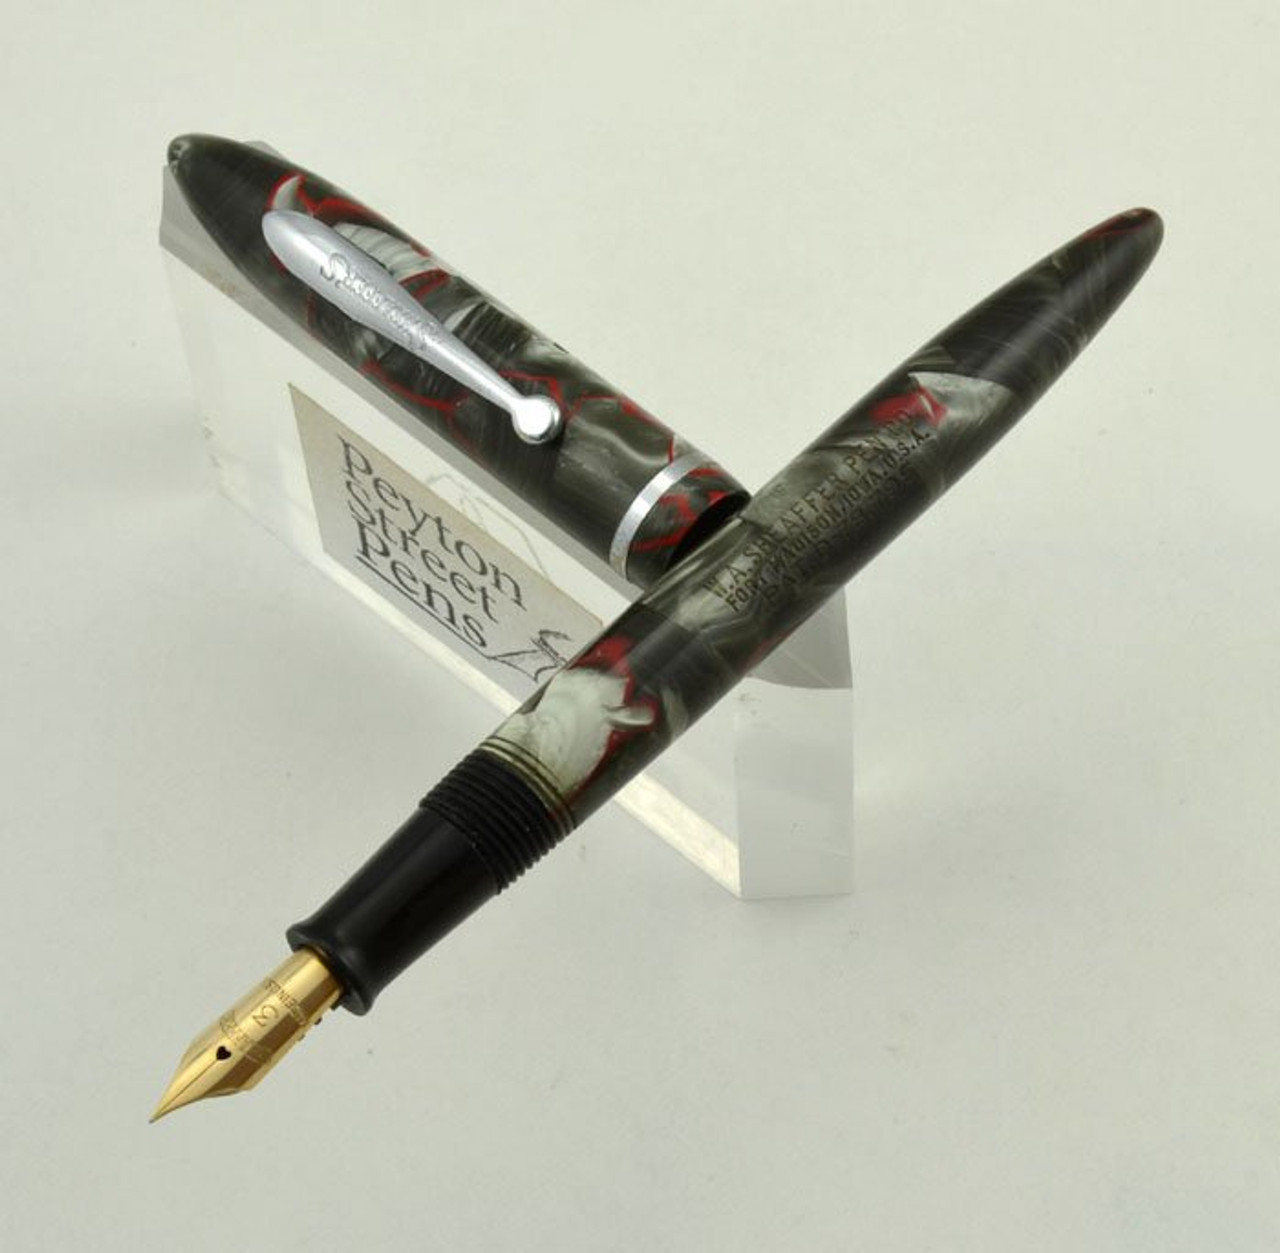 Sheaffer Balance Fountain Pen - Full Size, Grey w Red Veins, #3 Fine Nib (Excellent, Restored)